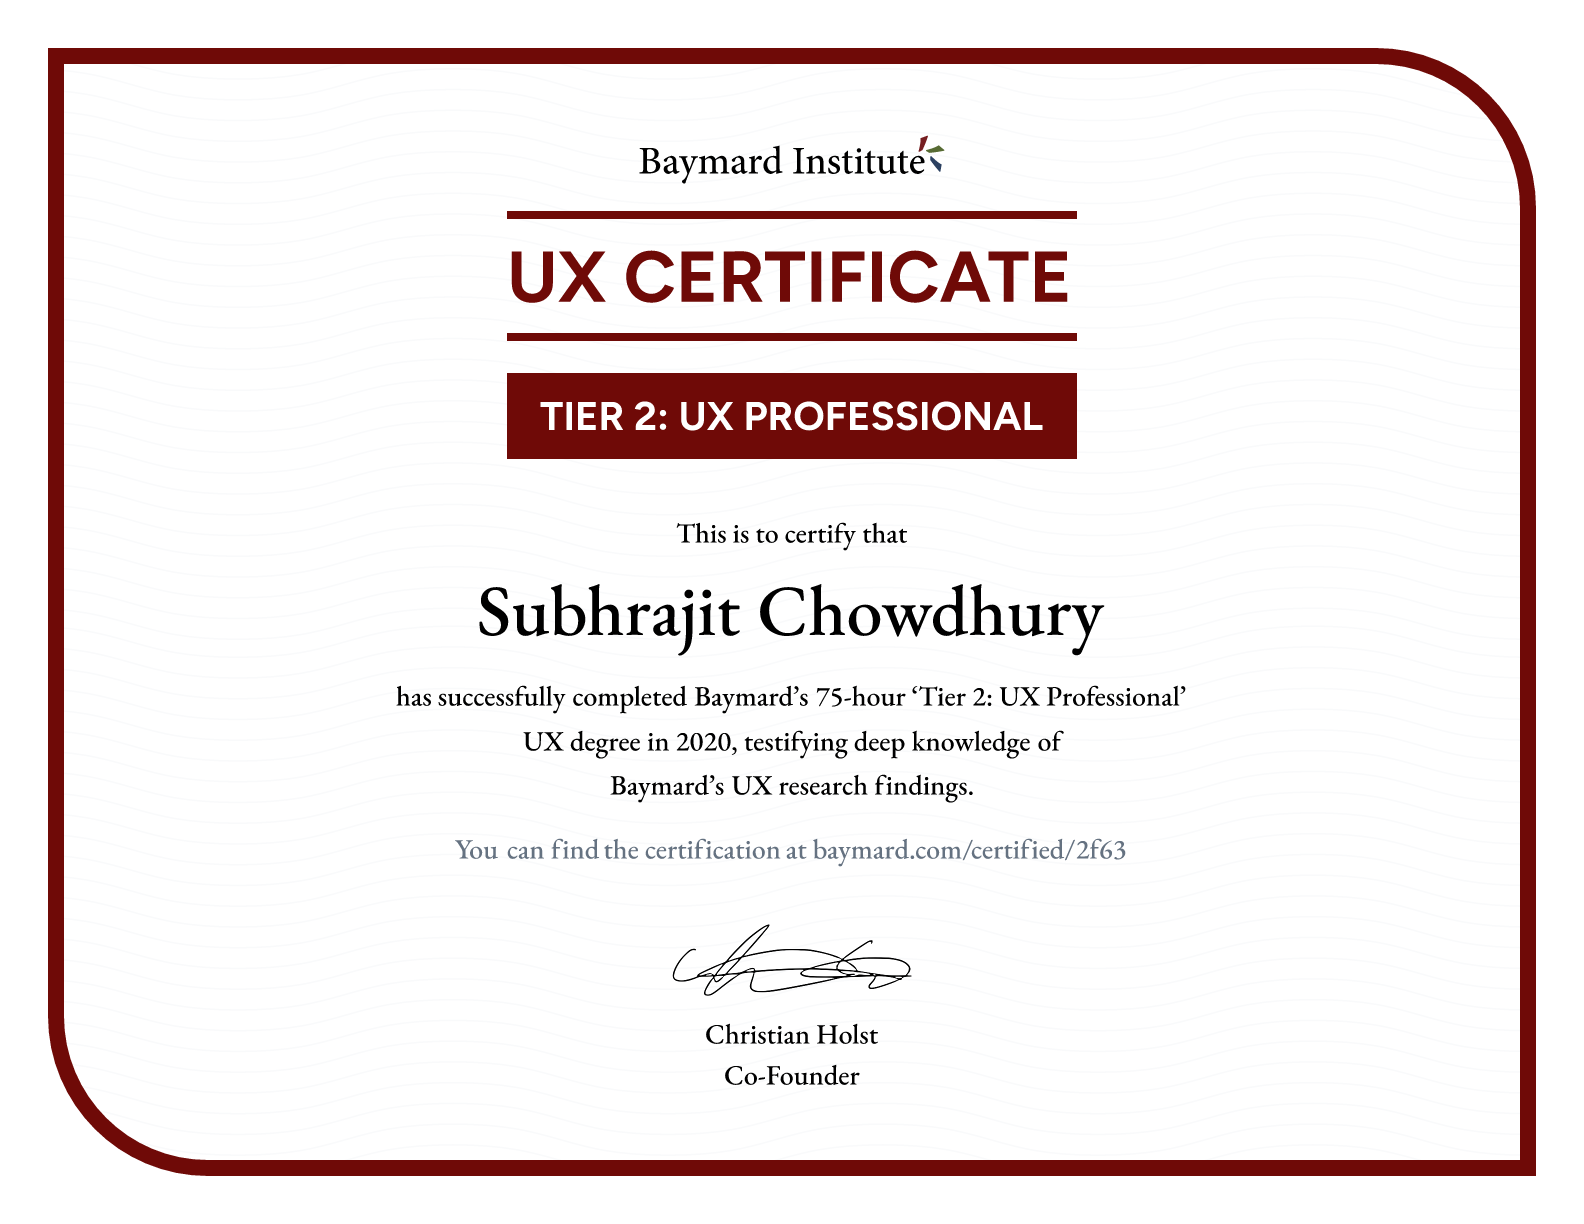 Subhrajit Chowdhury’s certificate